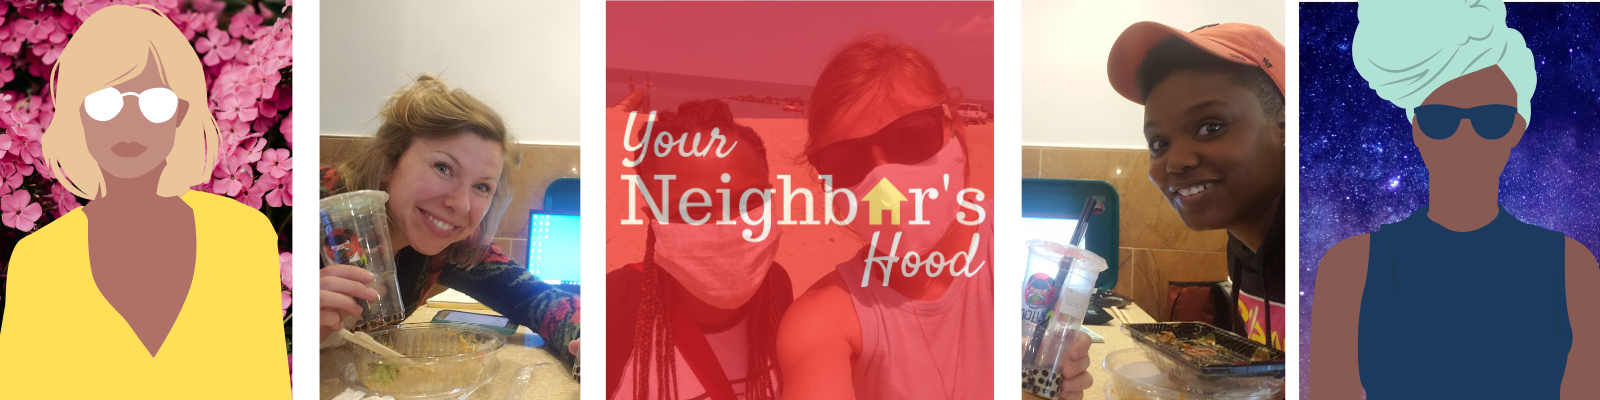 Your Neighbor’s Hood Podcast